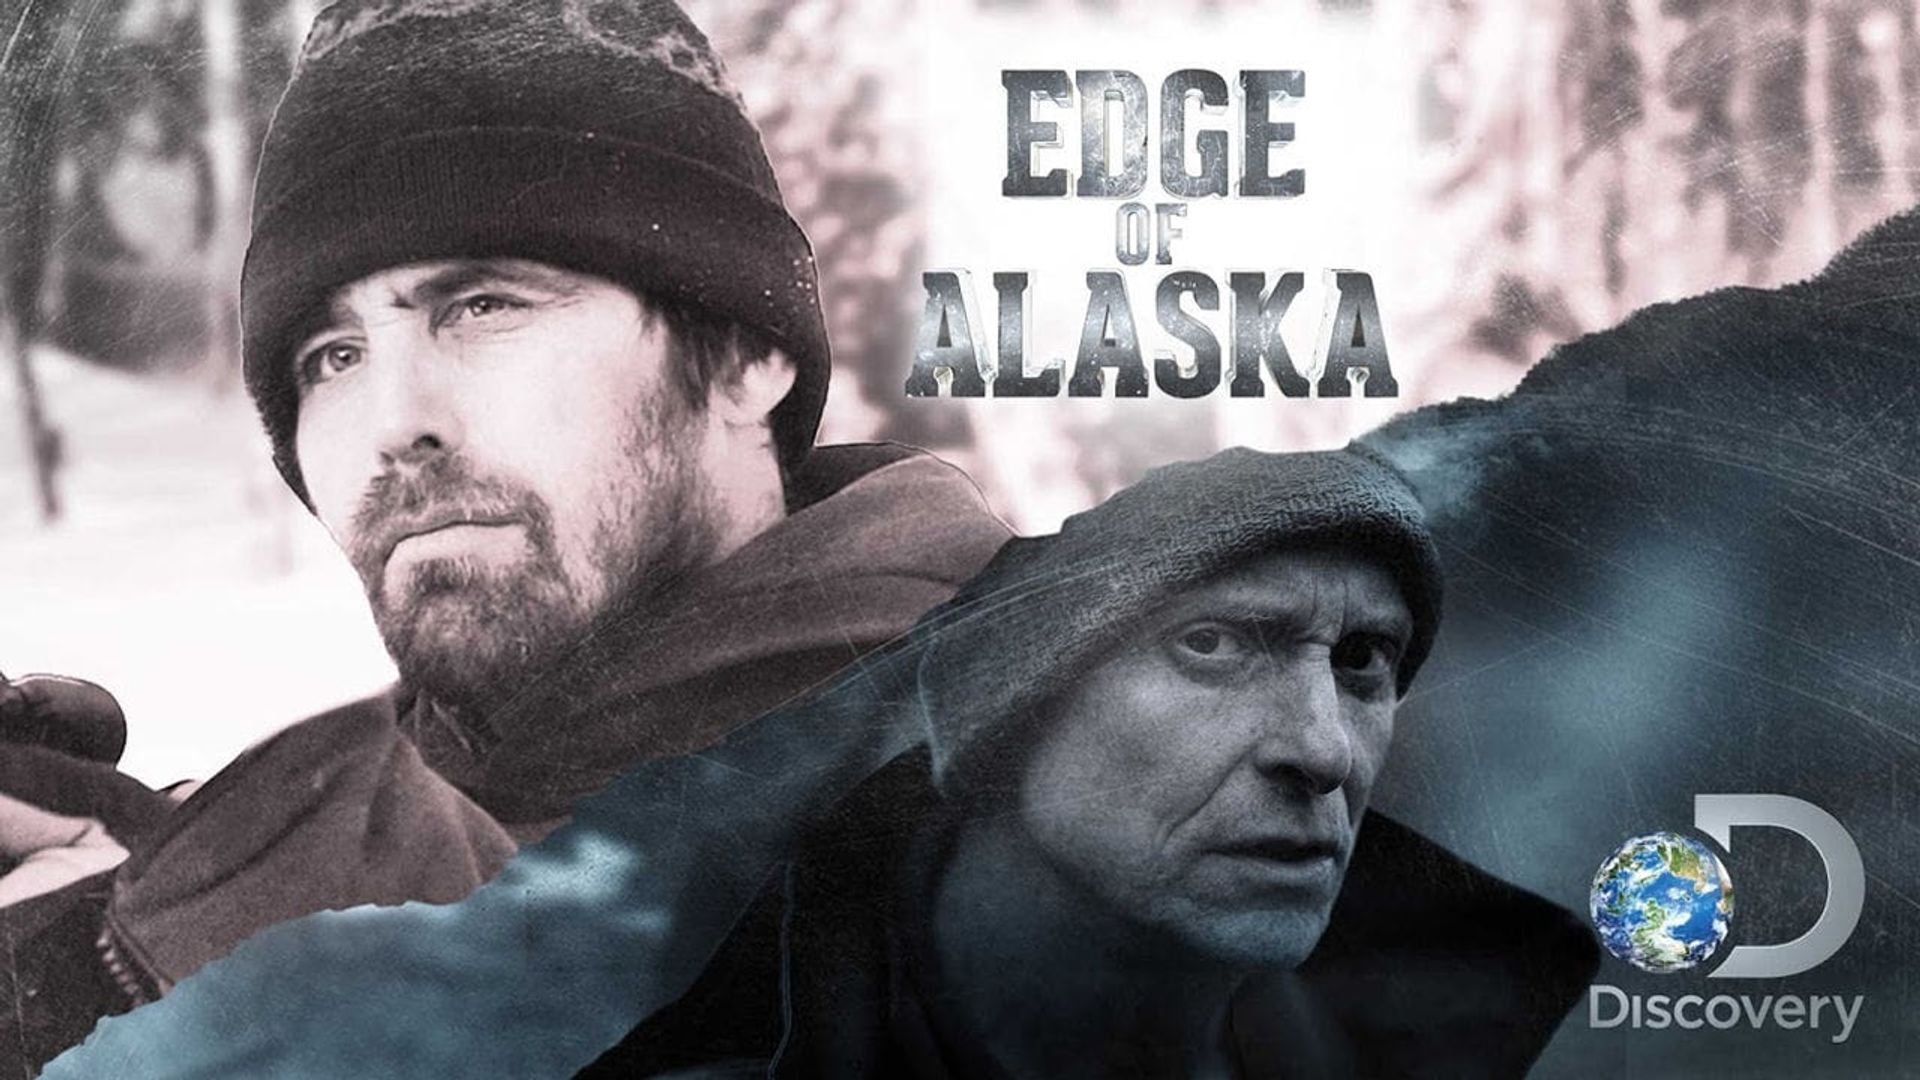 Edge of Alaska background